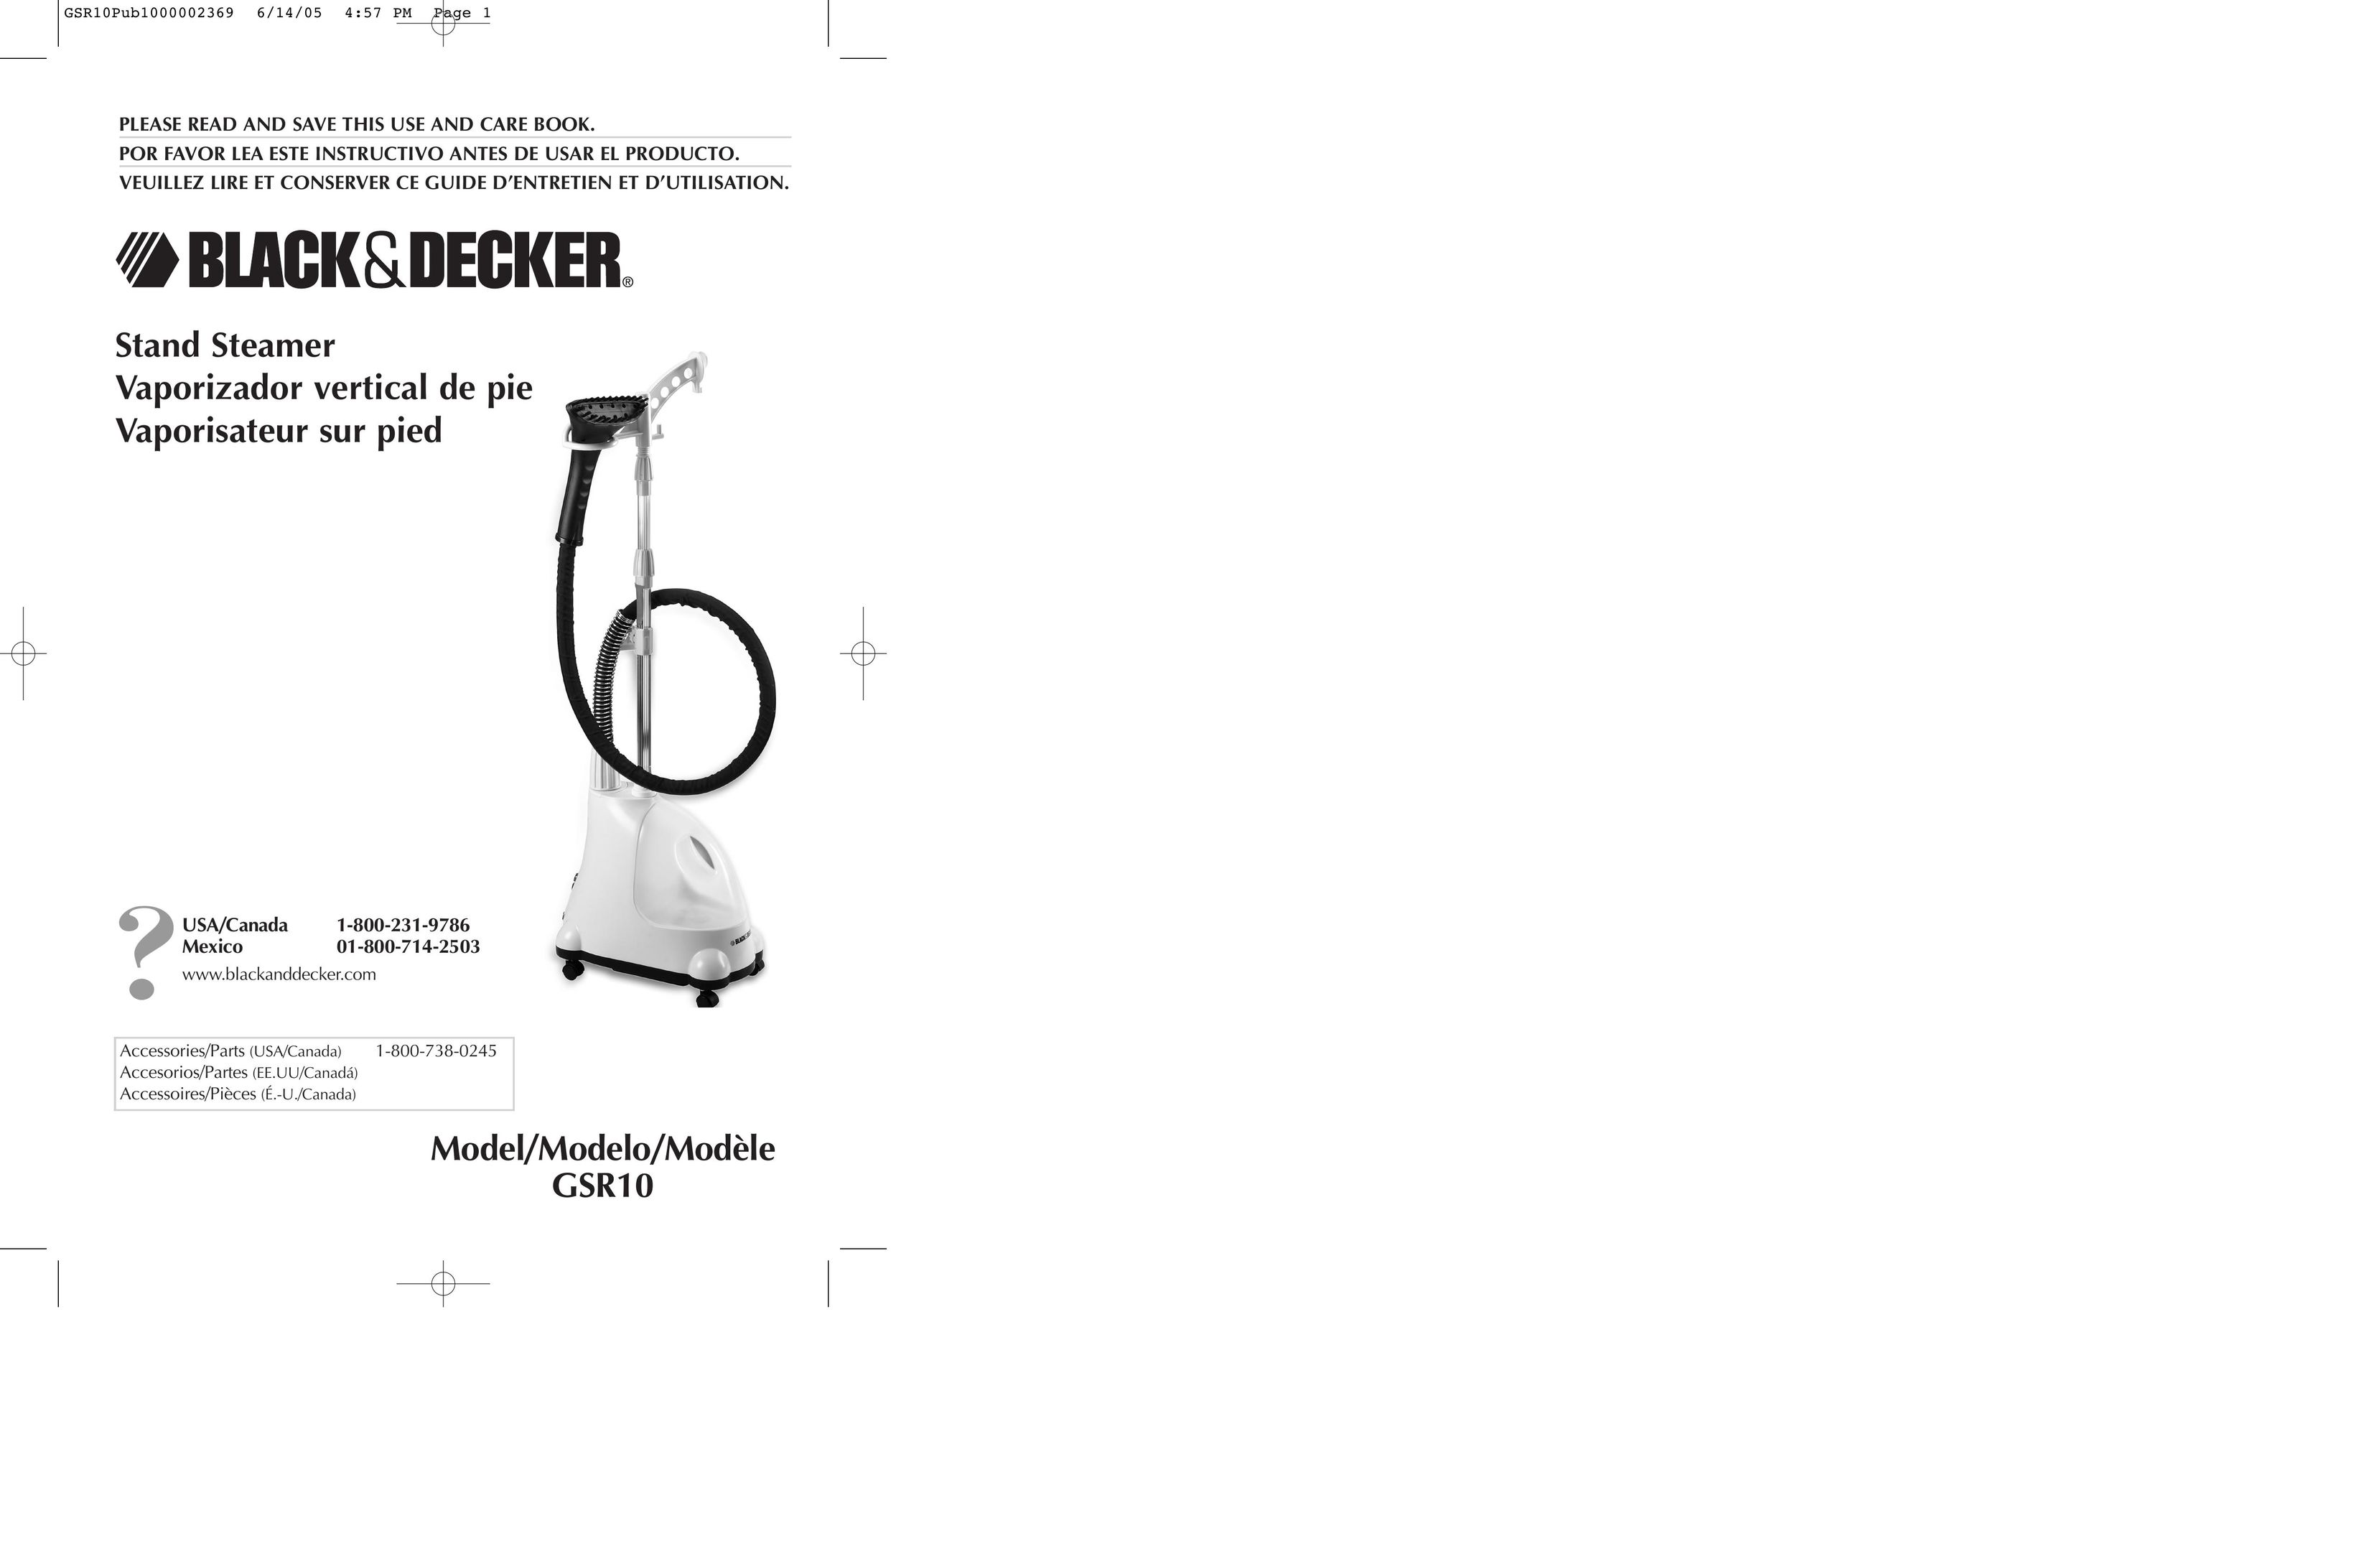 Black & Decker GSR10 Electric Steamer User Manual